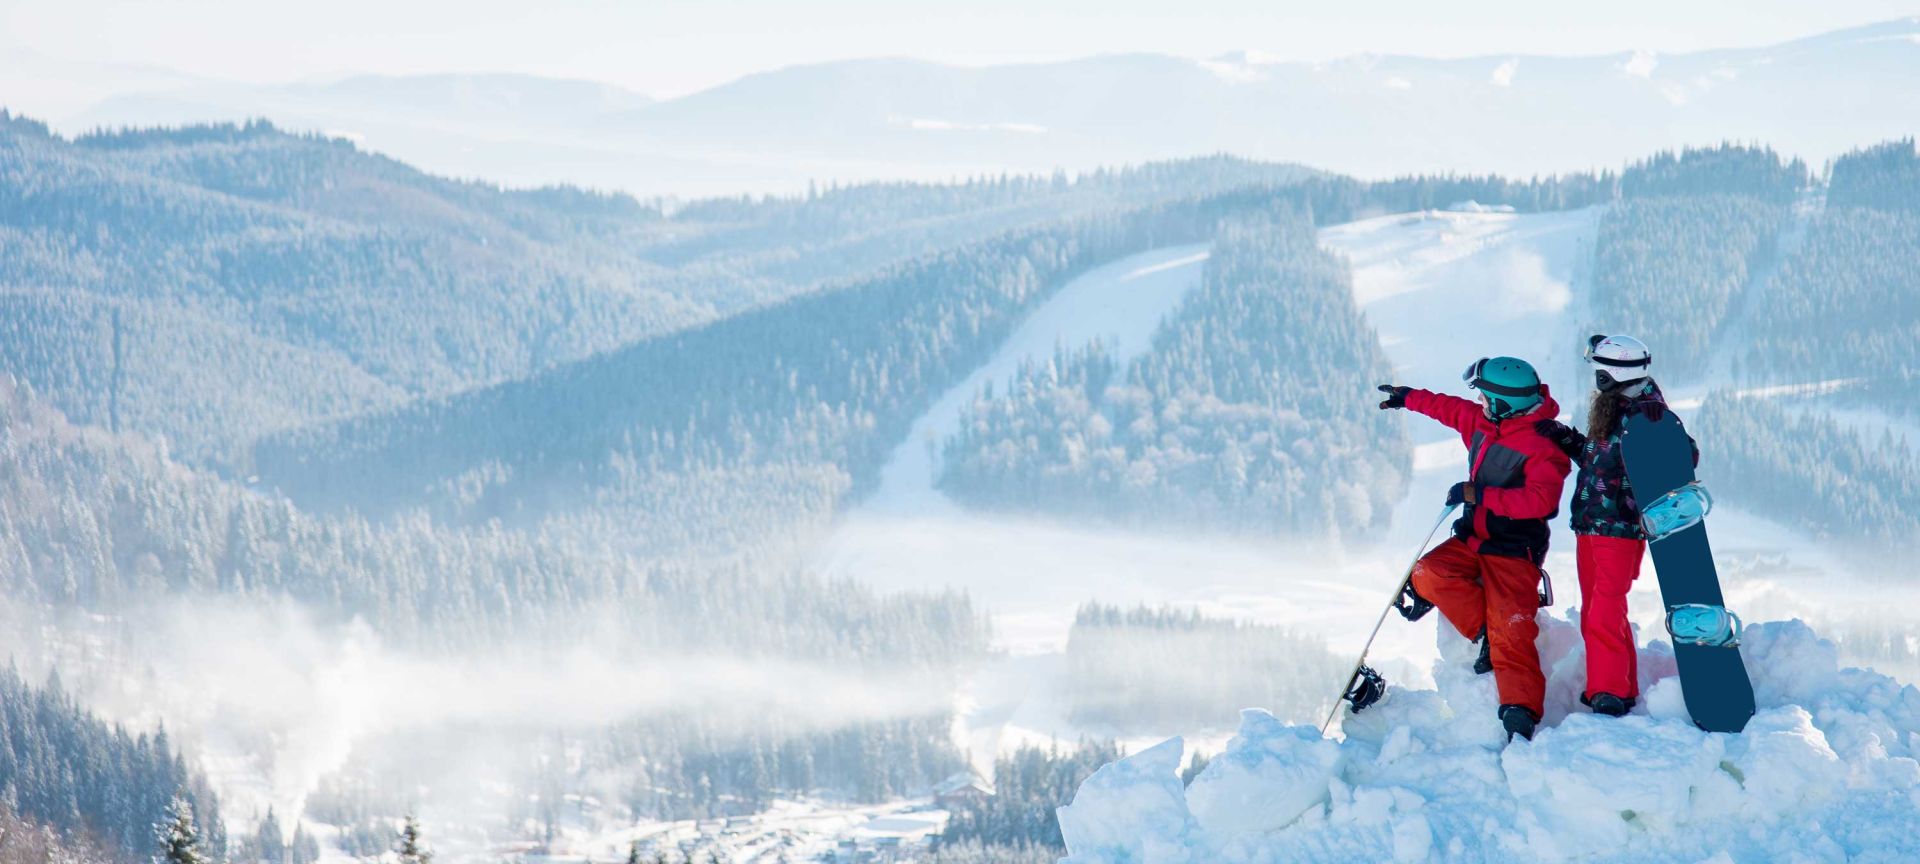 A Man Riding A Snowboard Down A Snow Covered Mountain